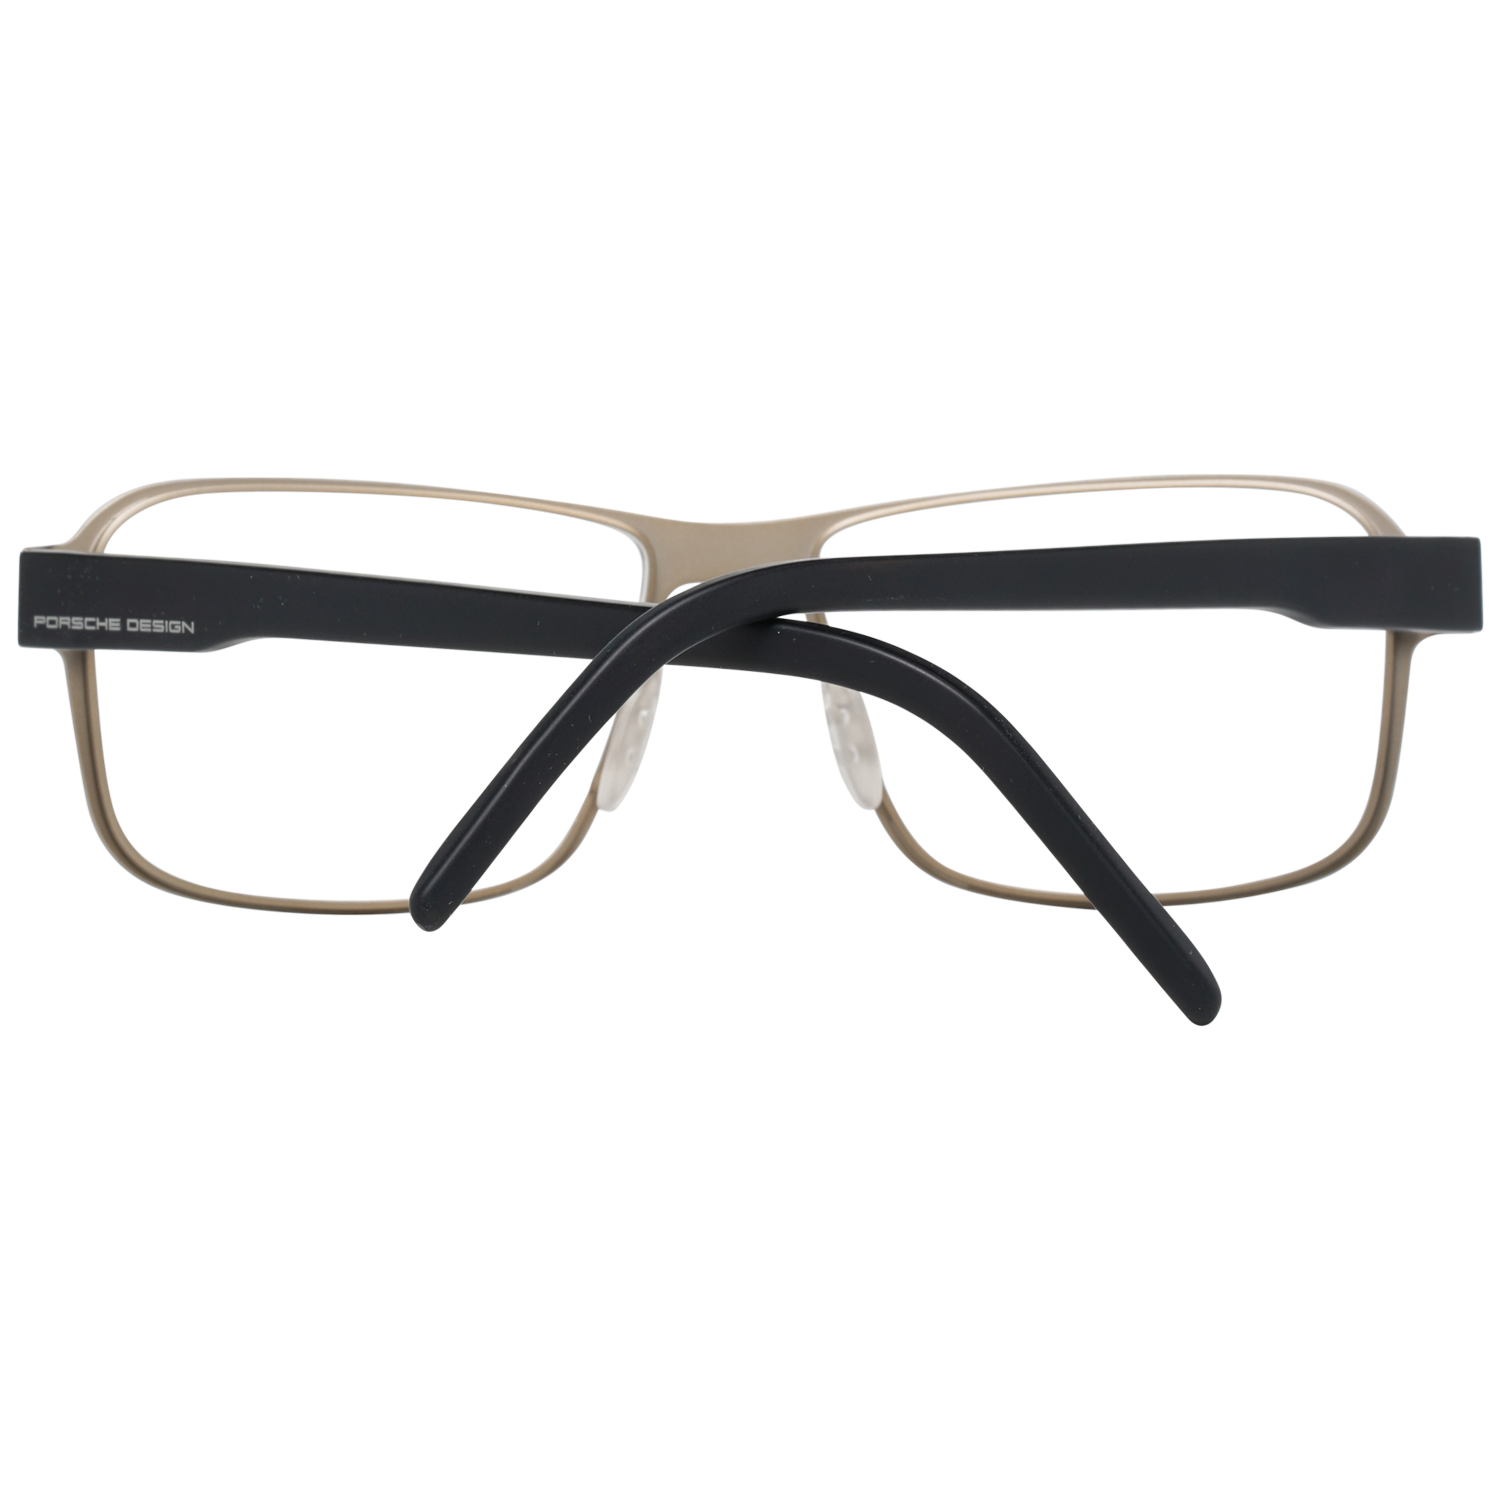 Porsche Design Men's Rectangle Gold Glasses Optical Frame P8290 D 56